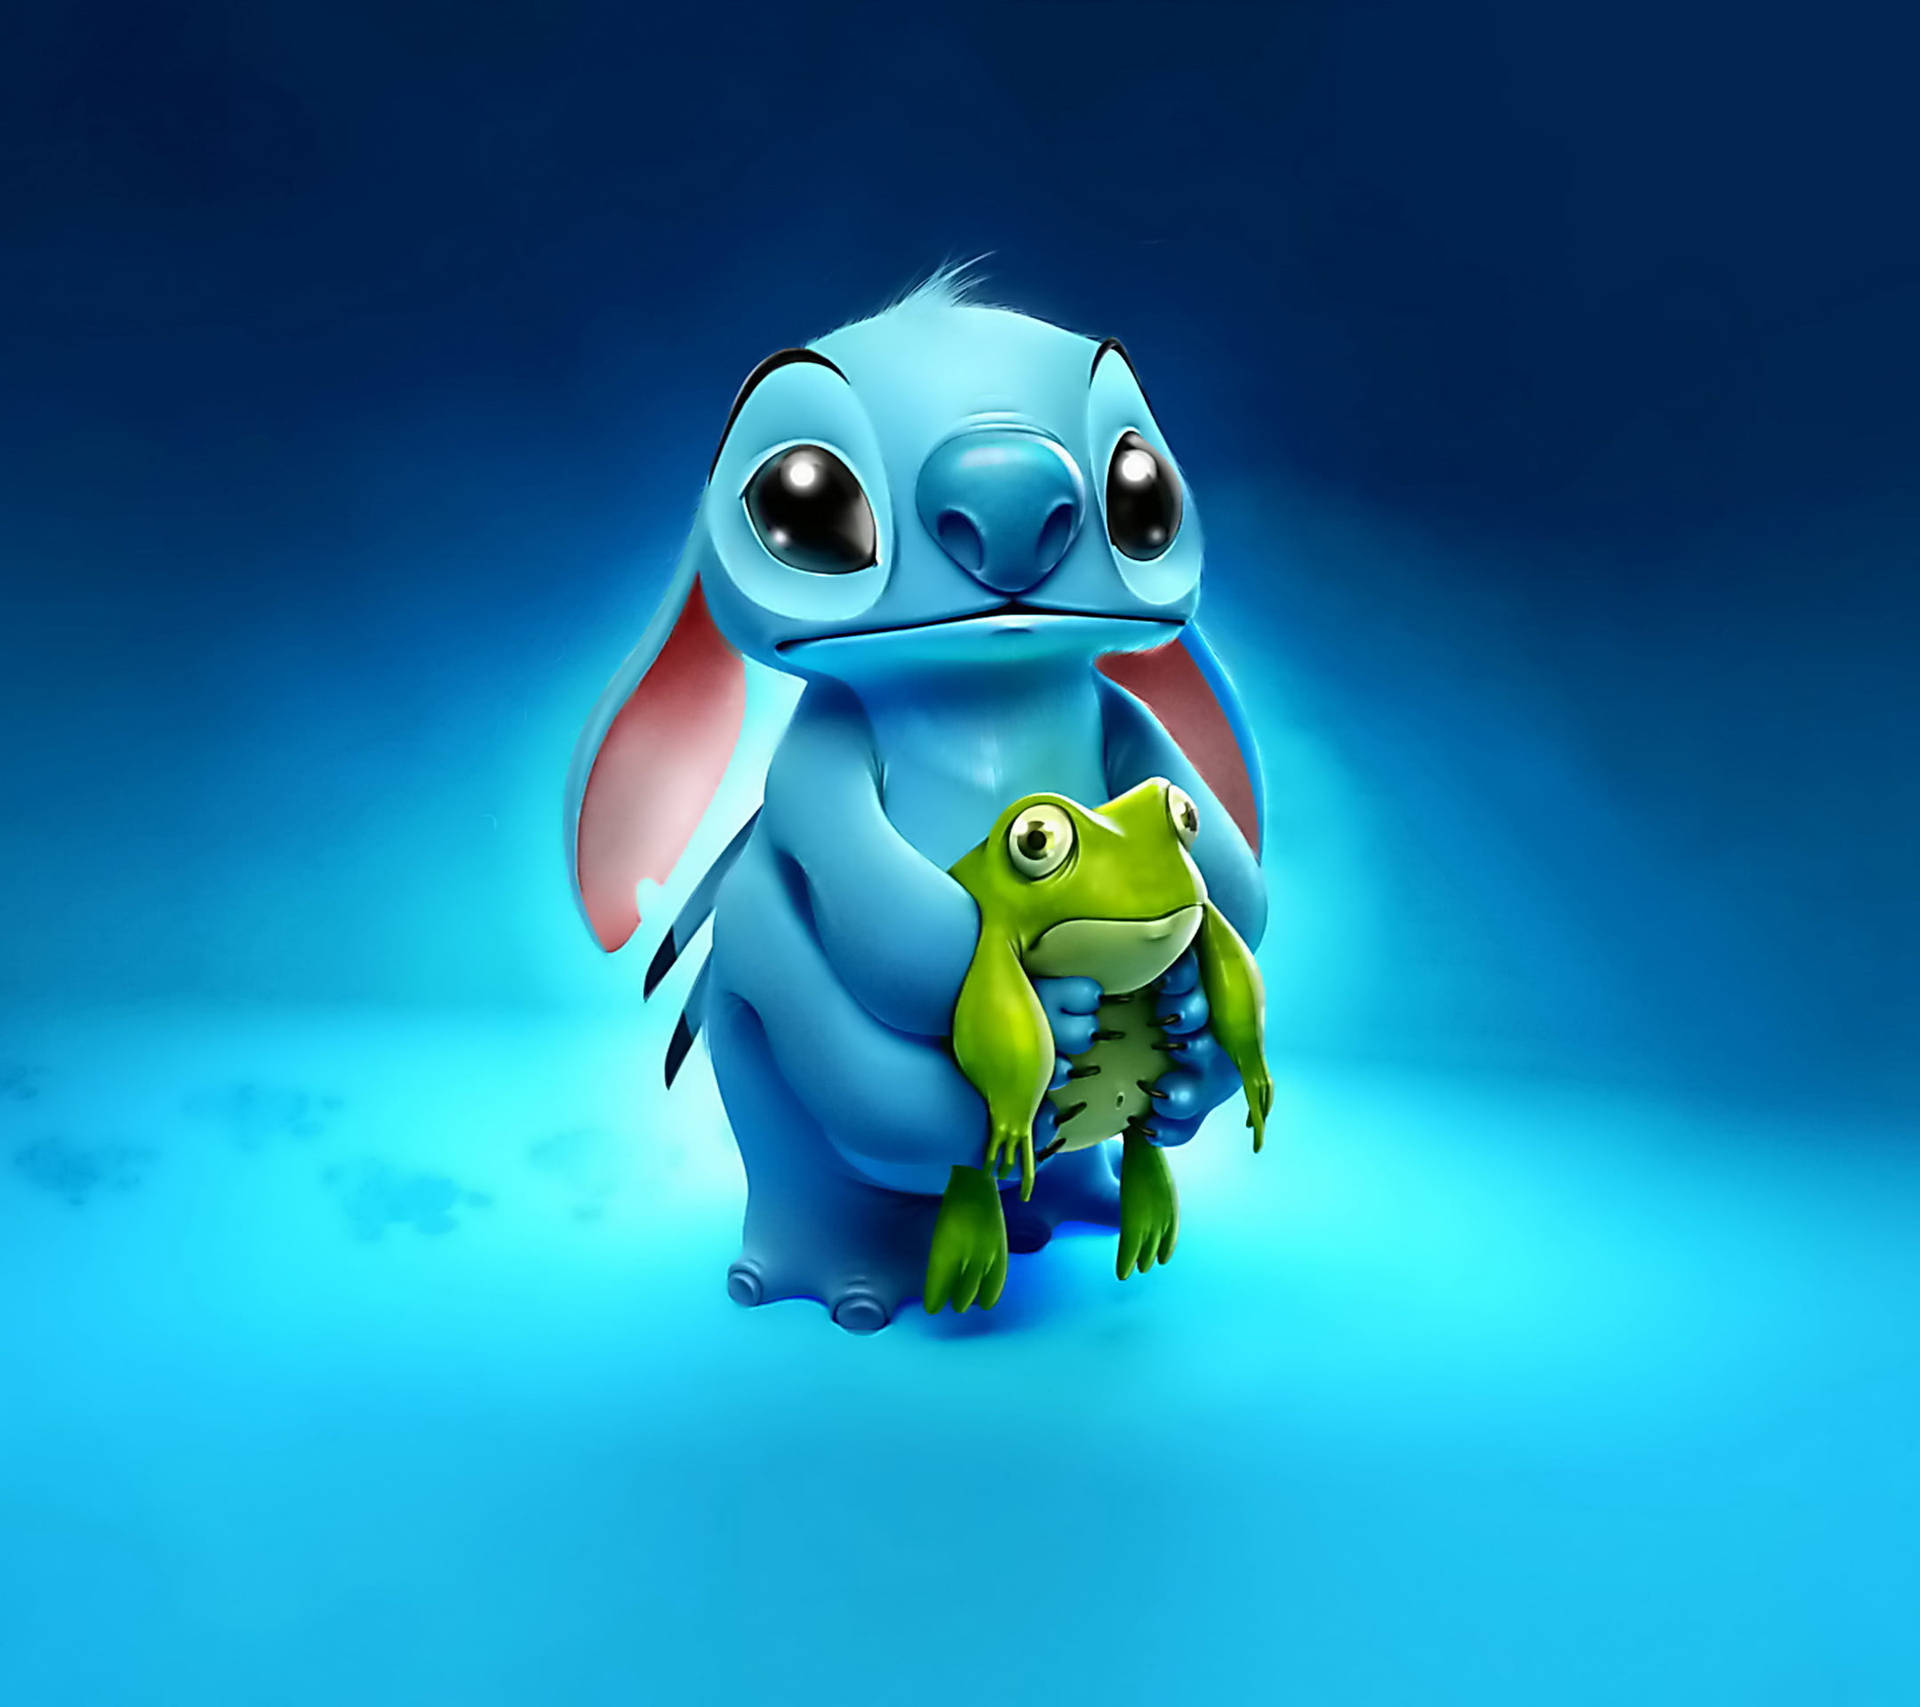 Top 999+ Cute Disney Stitch Wallpaper Full HD, 4K Free to Use